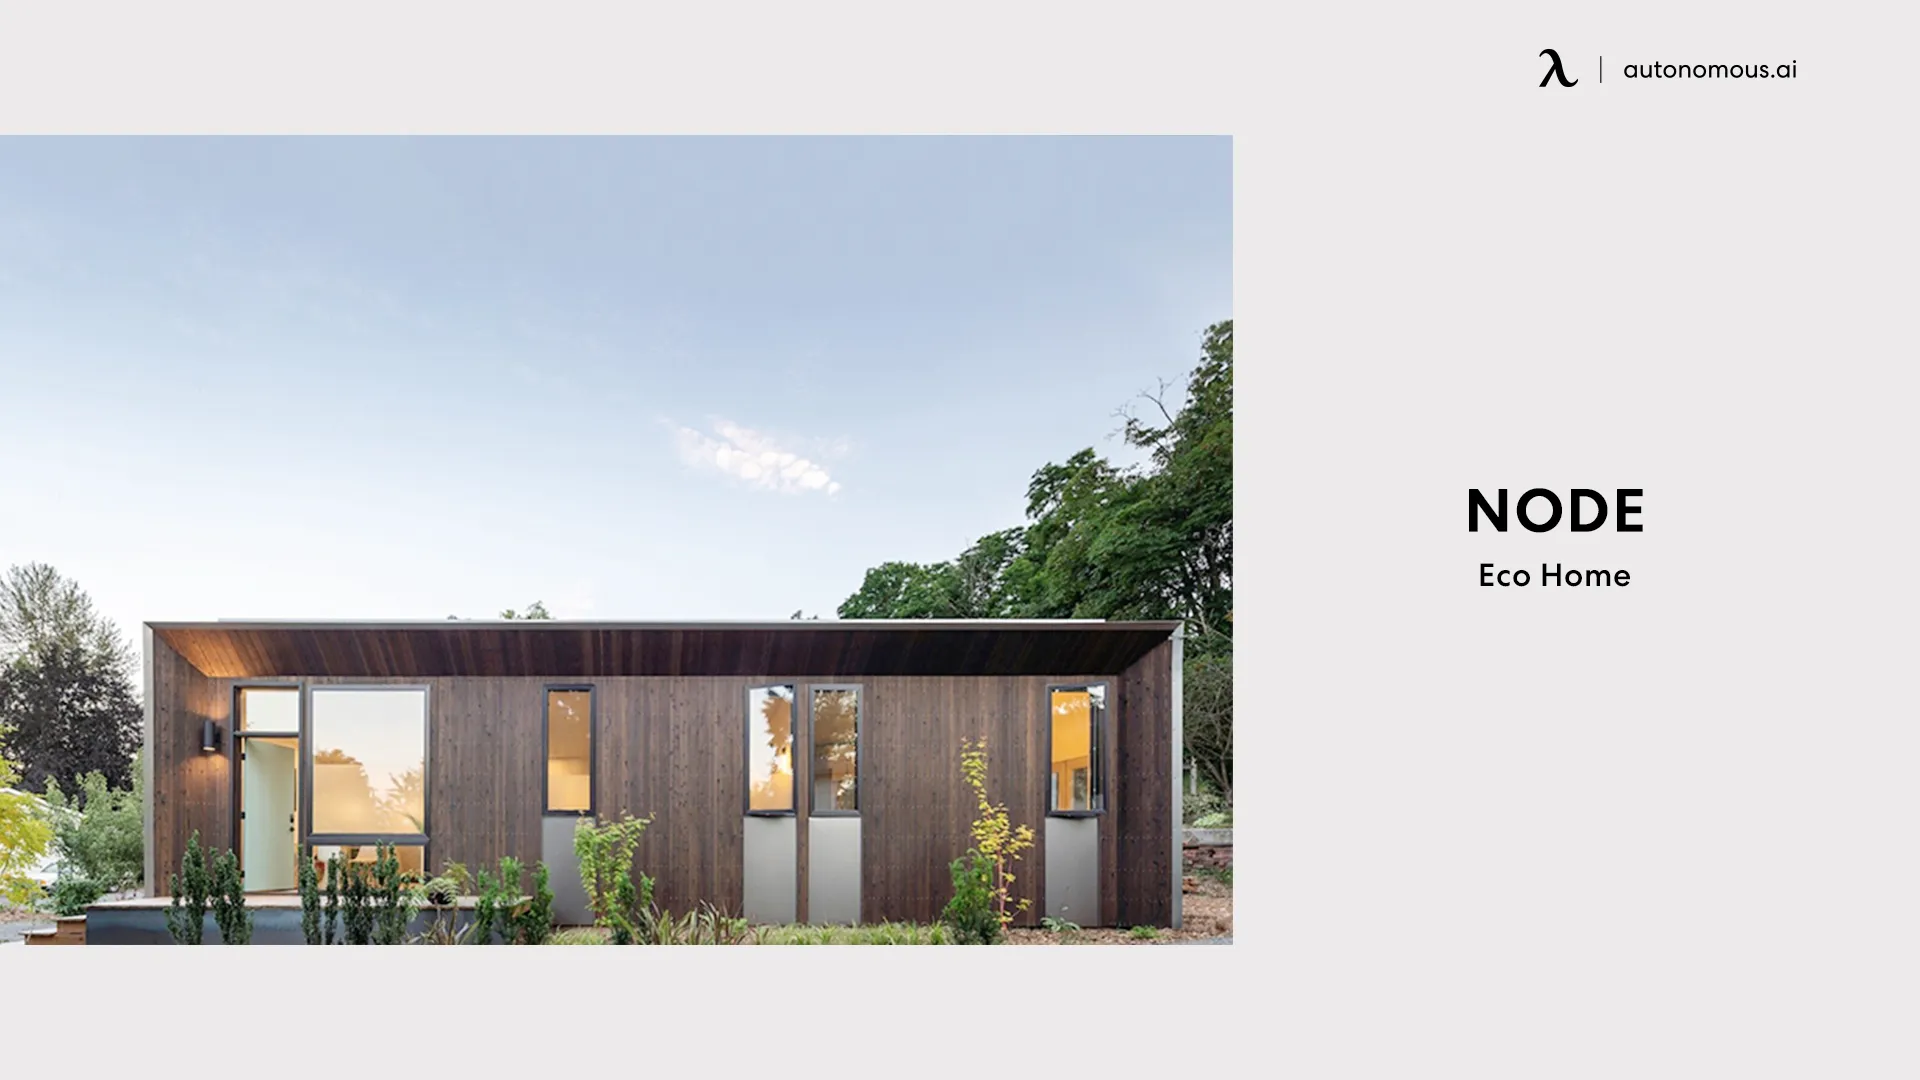 Node’s Eco Home cabin house